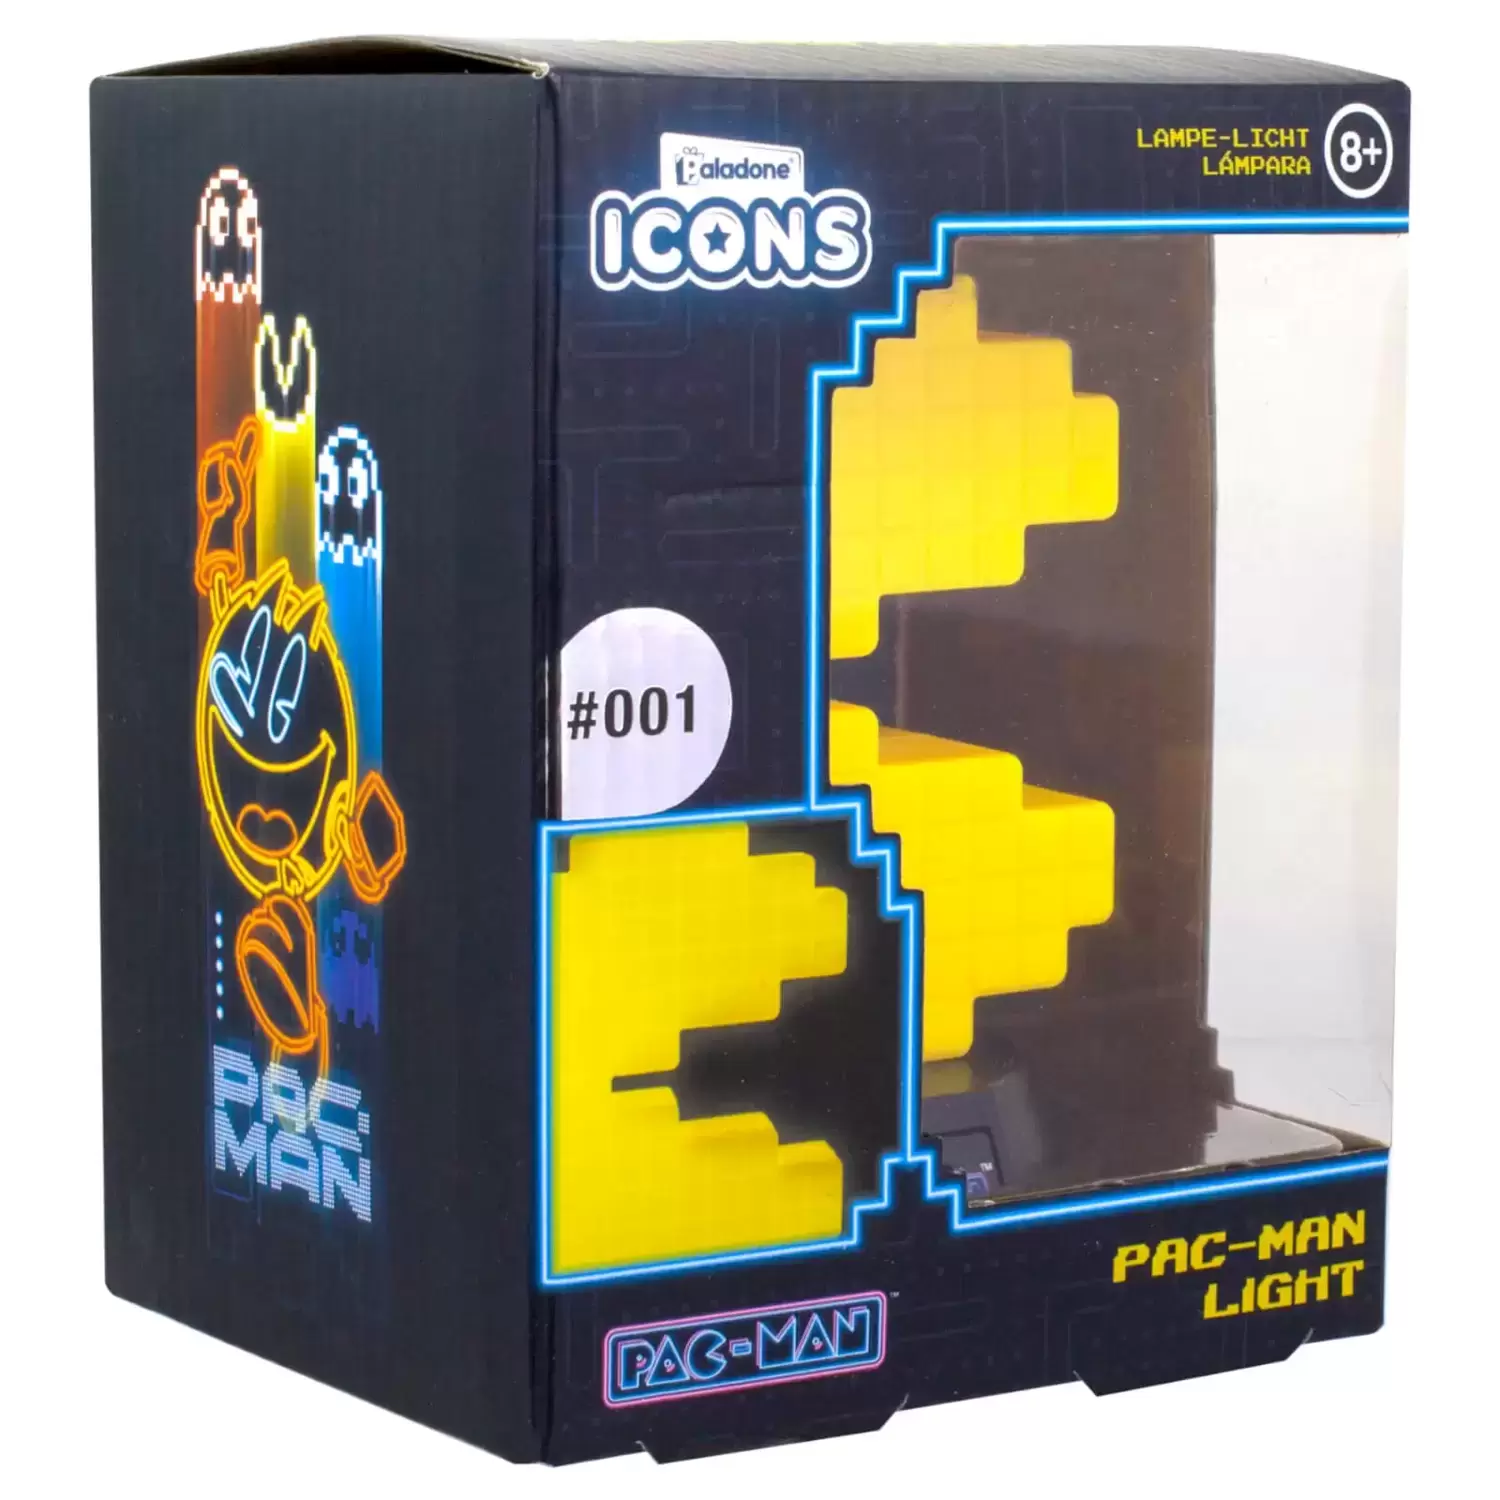 Paladone - Icons - Pac-Man Light